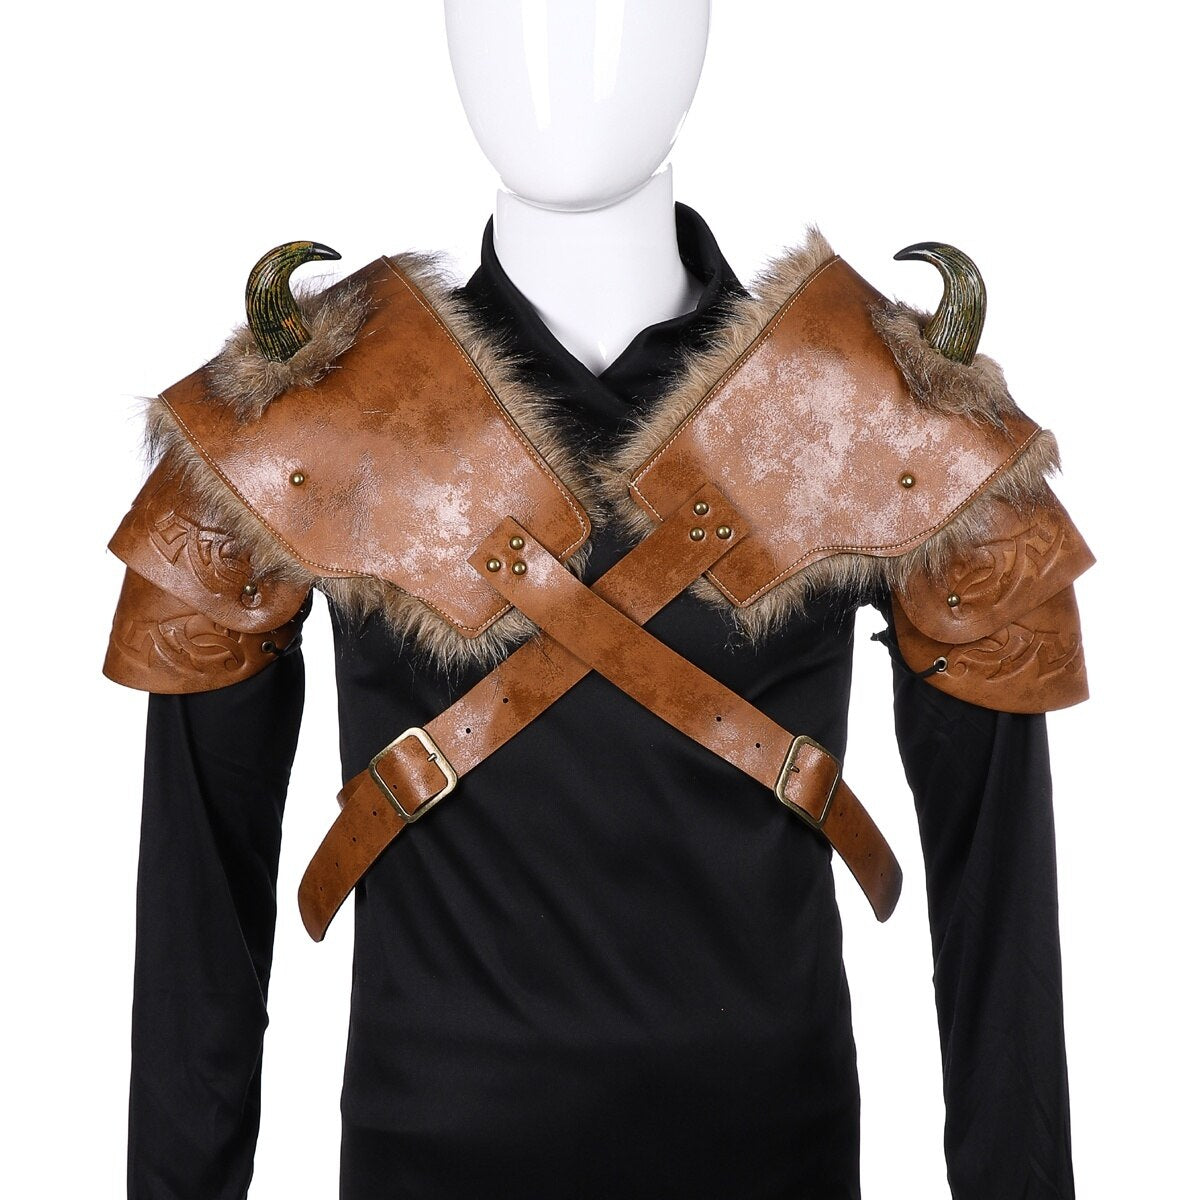 medieval warrior costumes for men